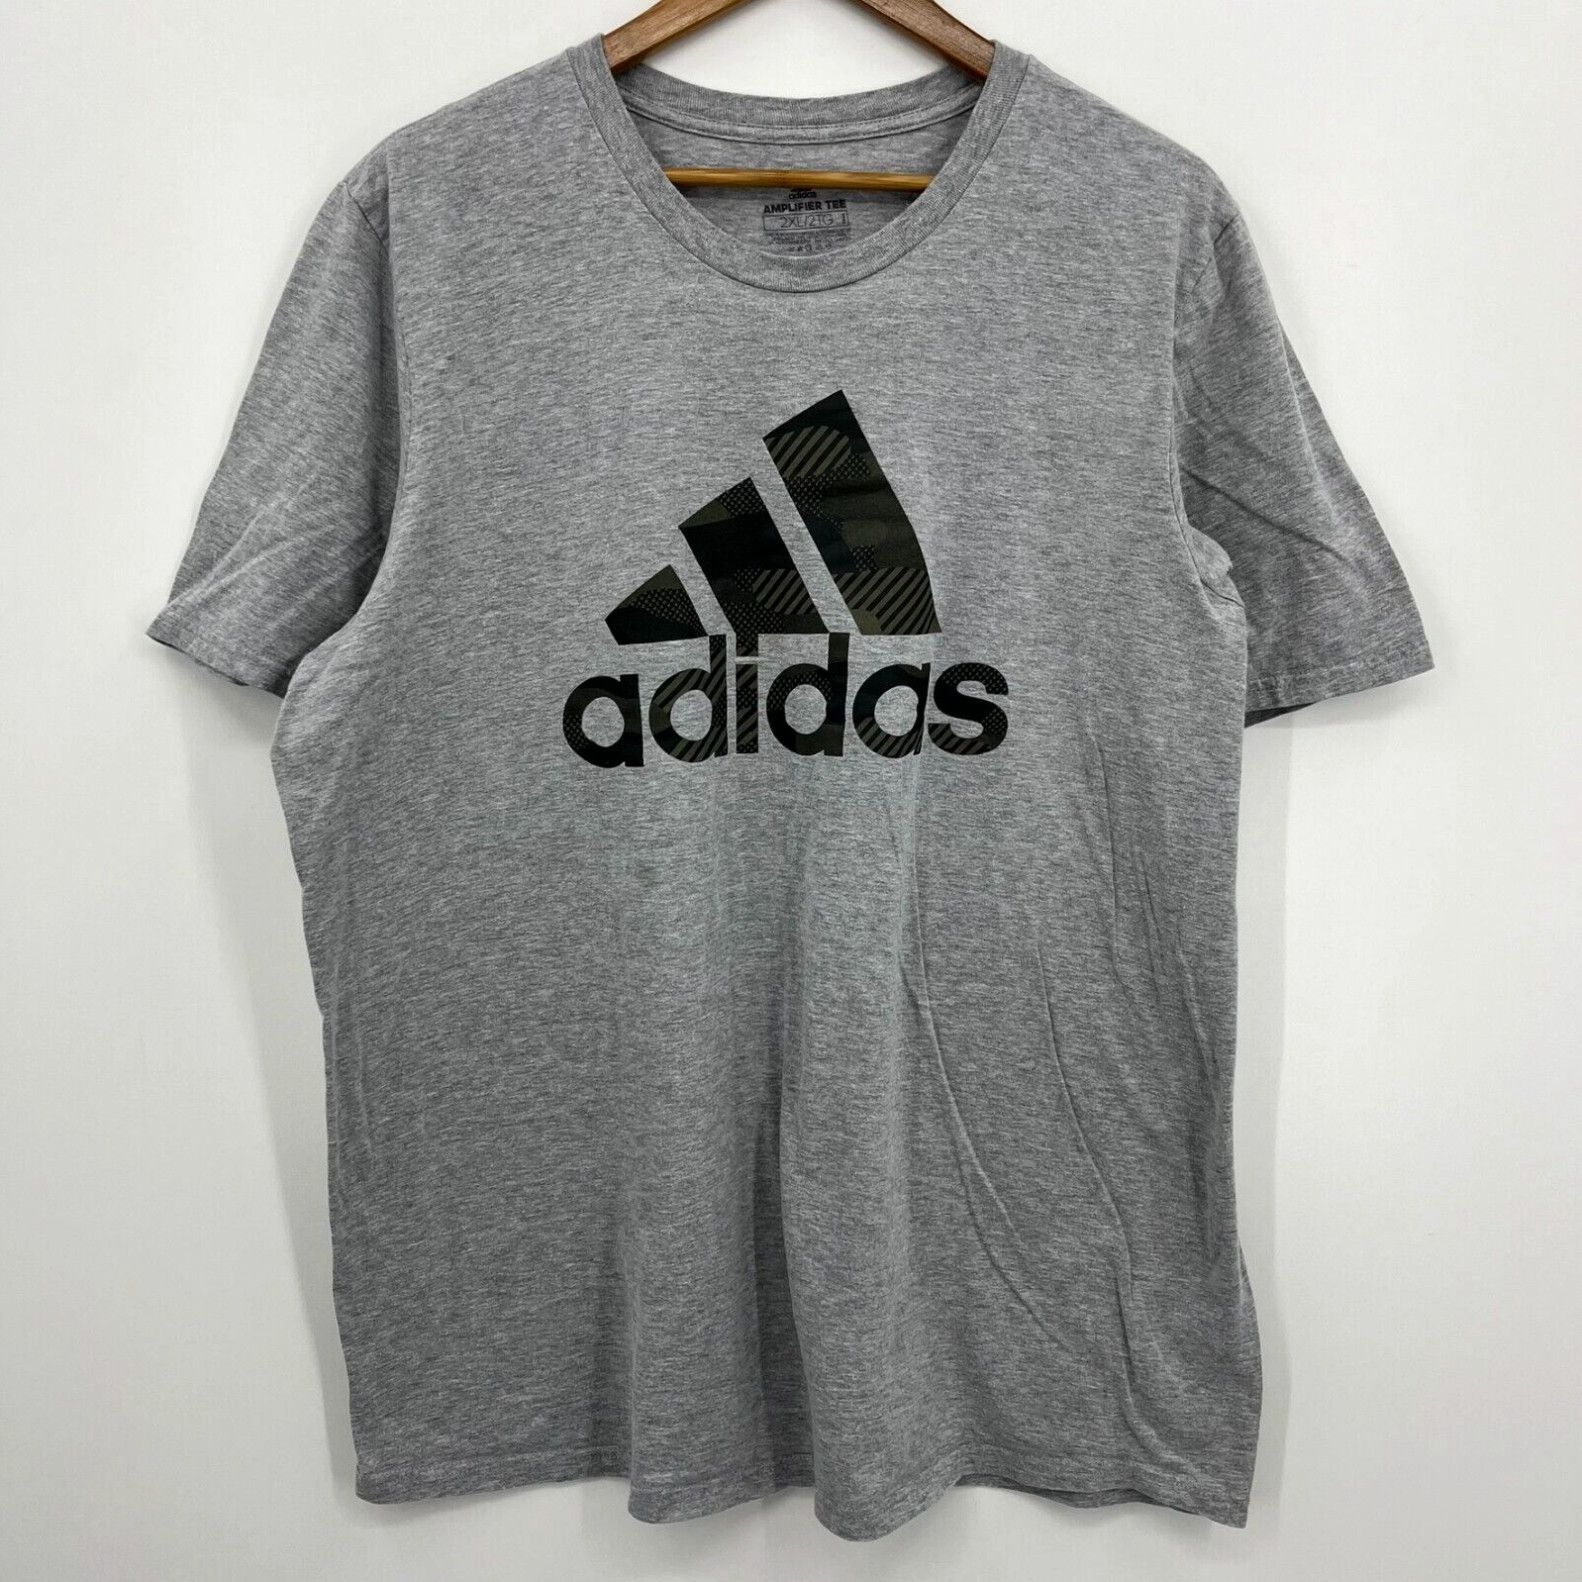 Adidas Palace Adidas Stan Smith T-Shirt | Grailed